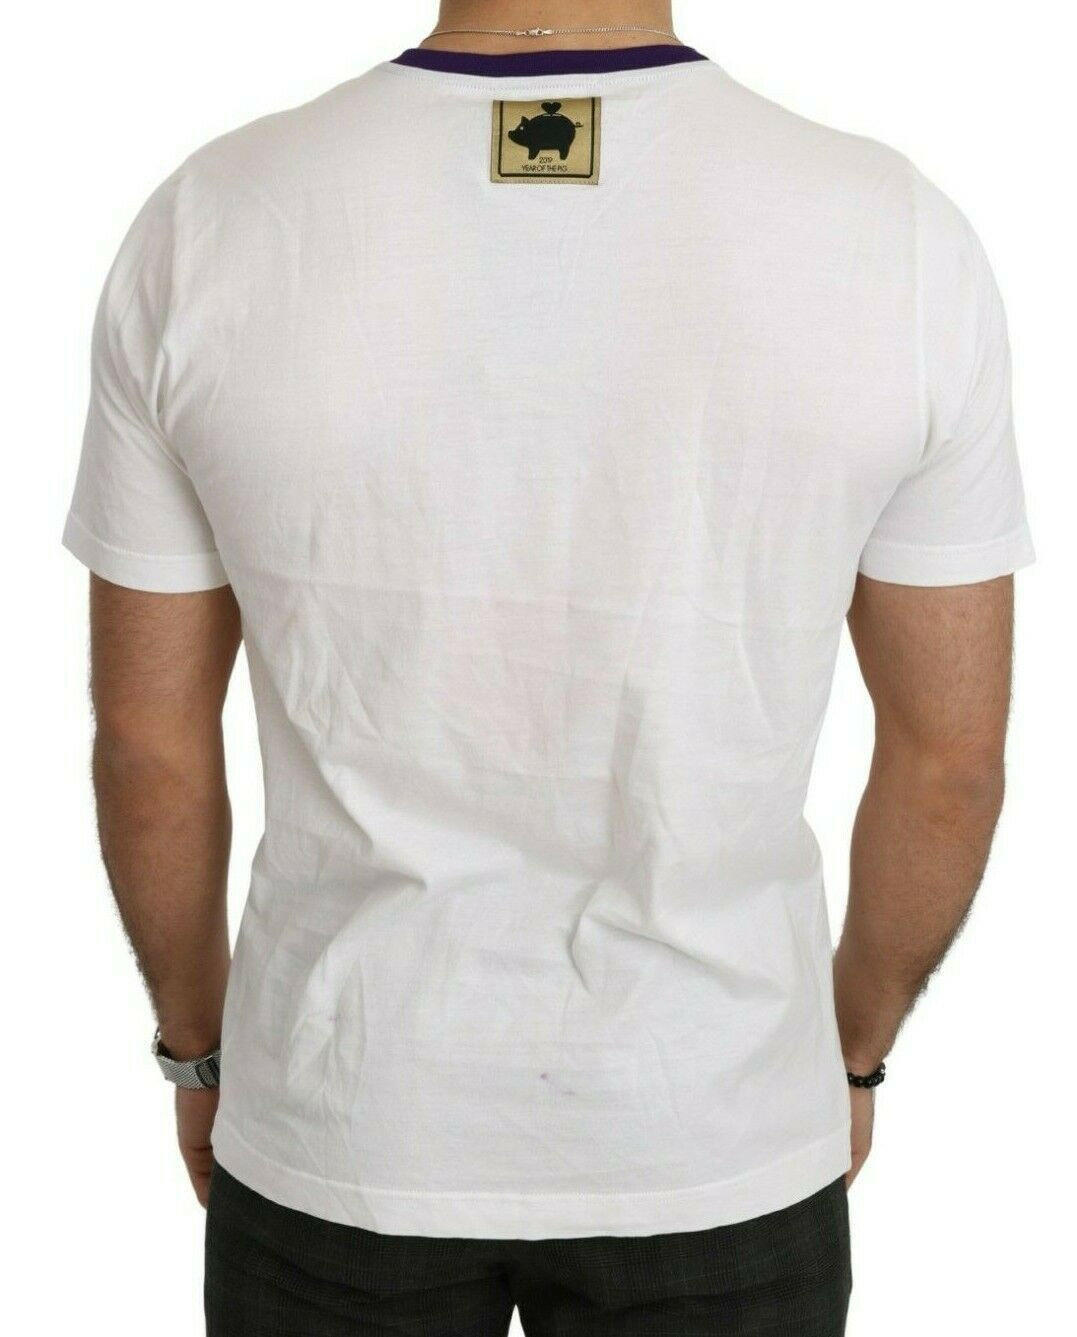 Dolce & Gabbana White Cotton Top Super Power Pig T-shirt - GENUINE AUTHENTIC BRAND LLC  